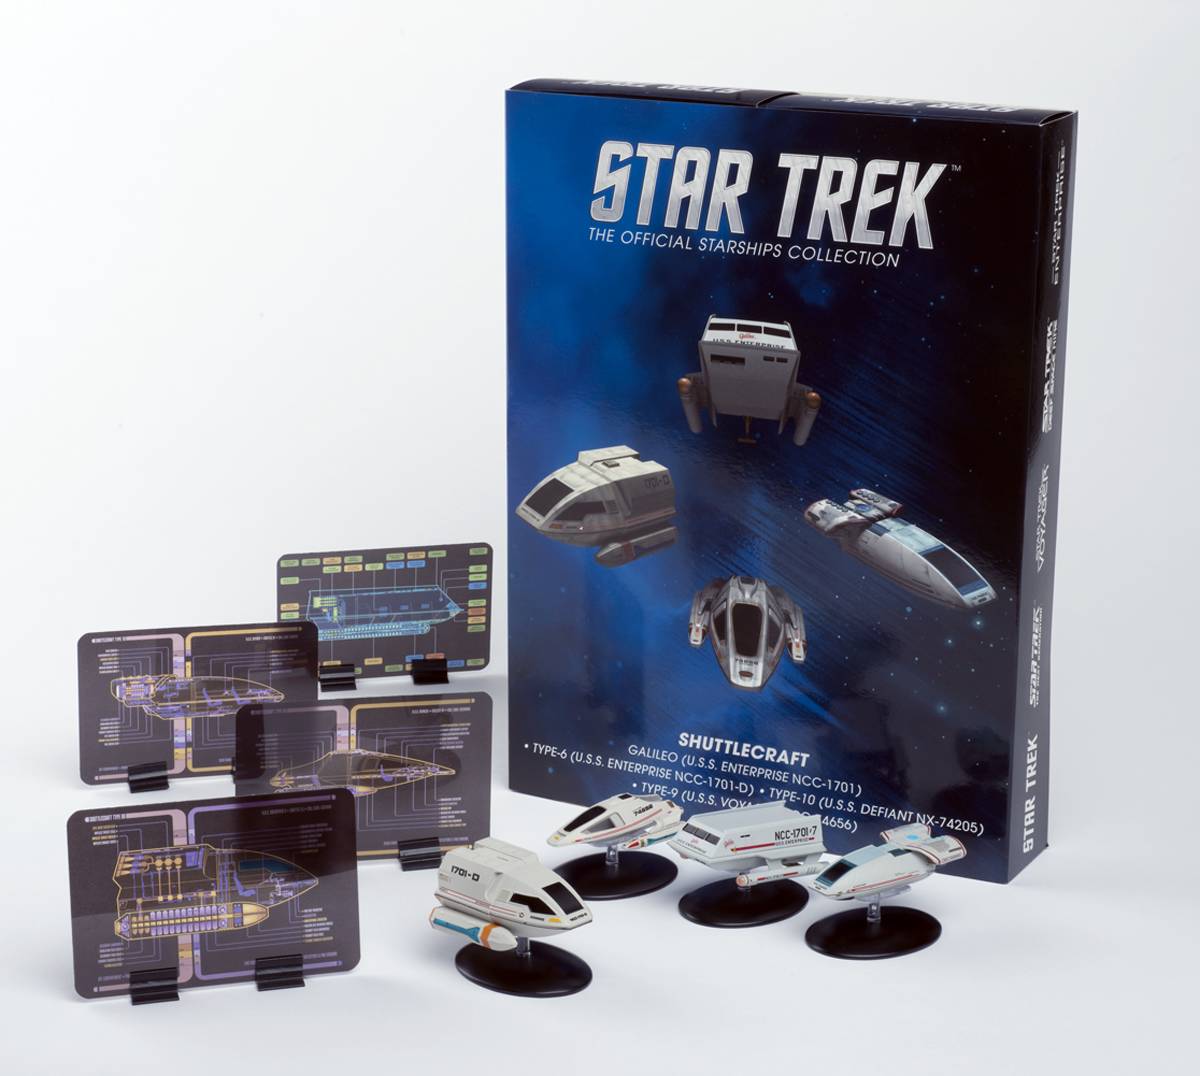 Star Trek Starships Special #6 Ss Enterprise Nx-01 Refit